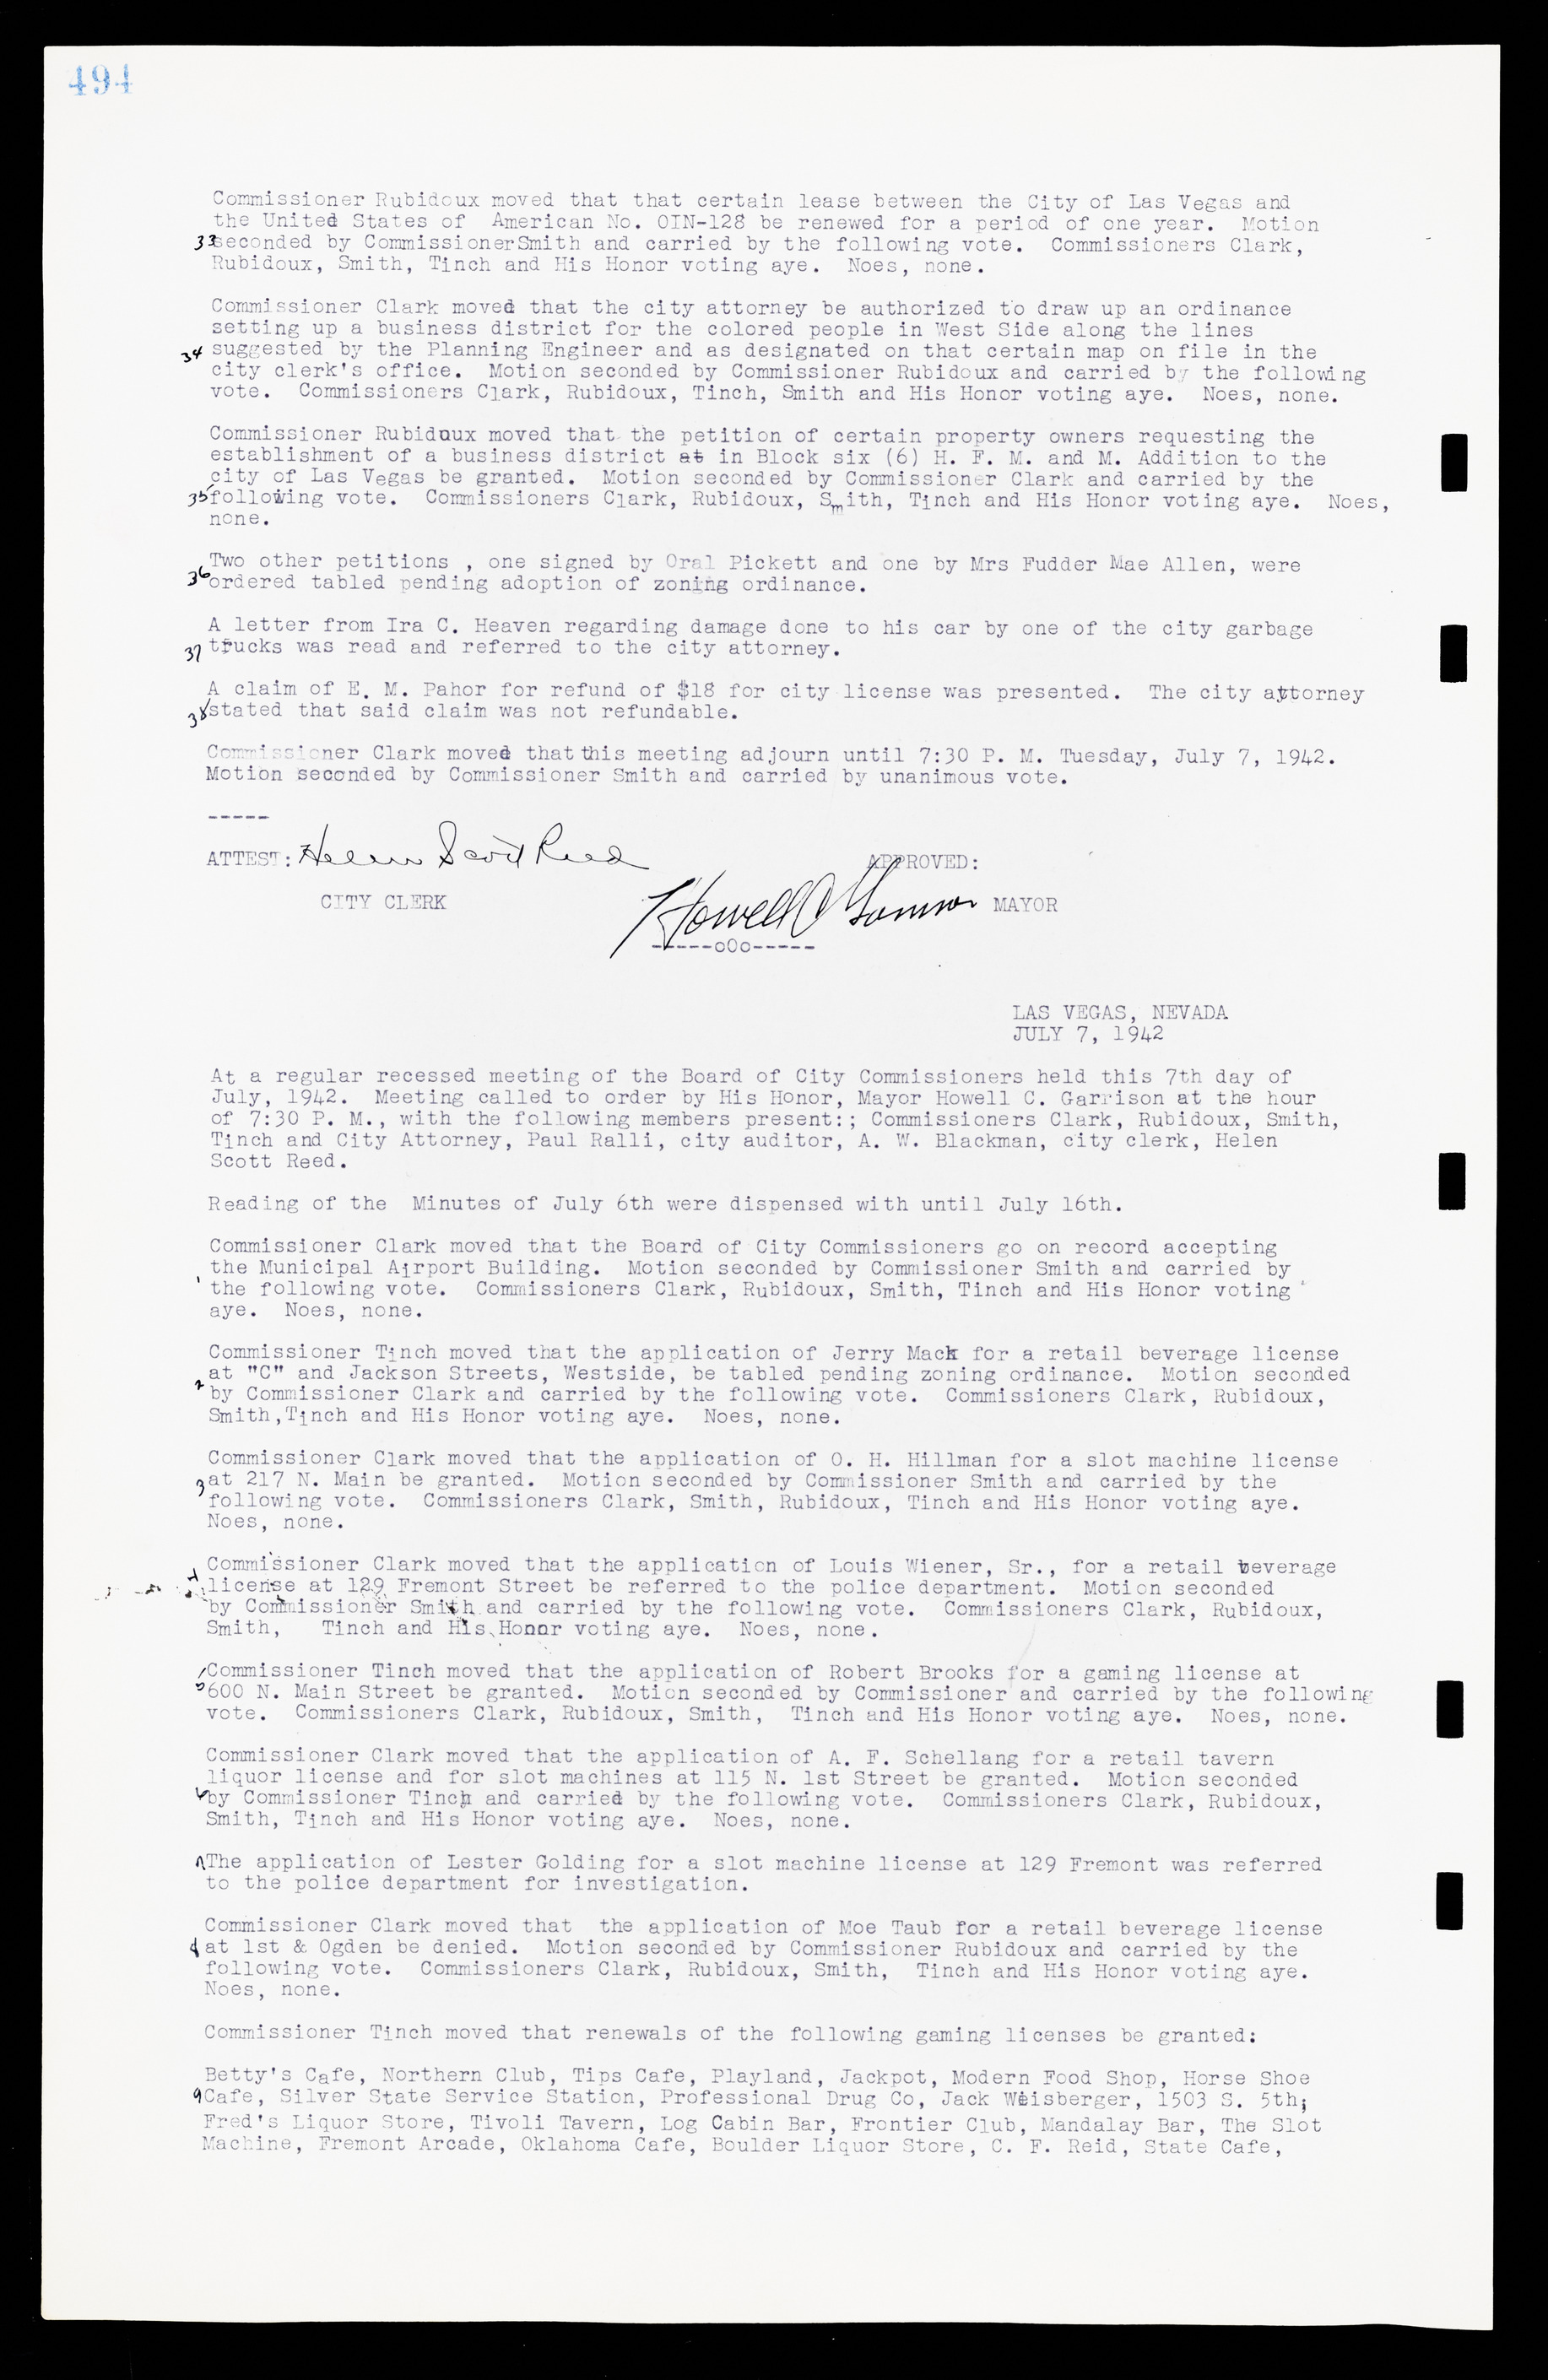 Las Vegas City Commission Minutes, February 17, 1937 to August 4, 1942, lvc000004-522